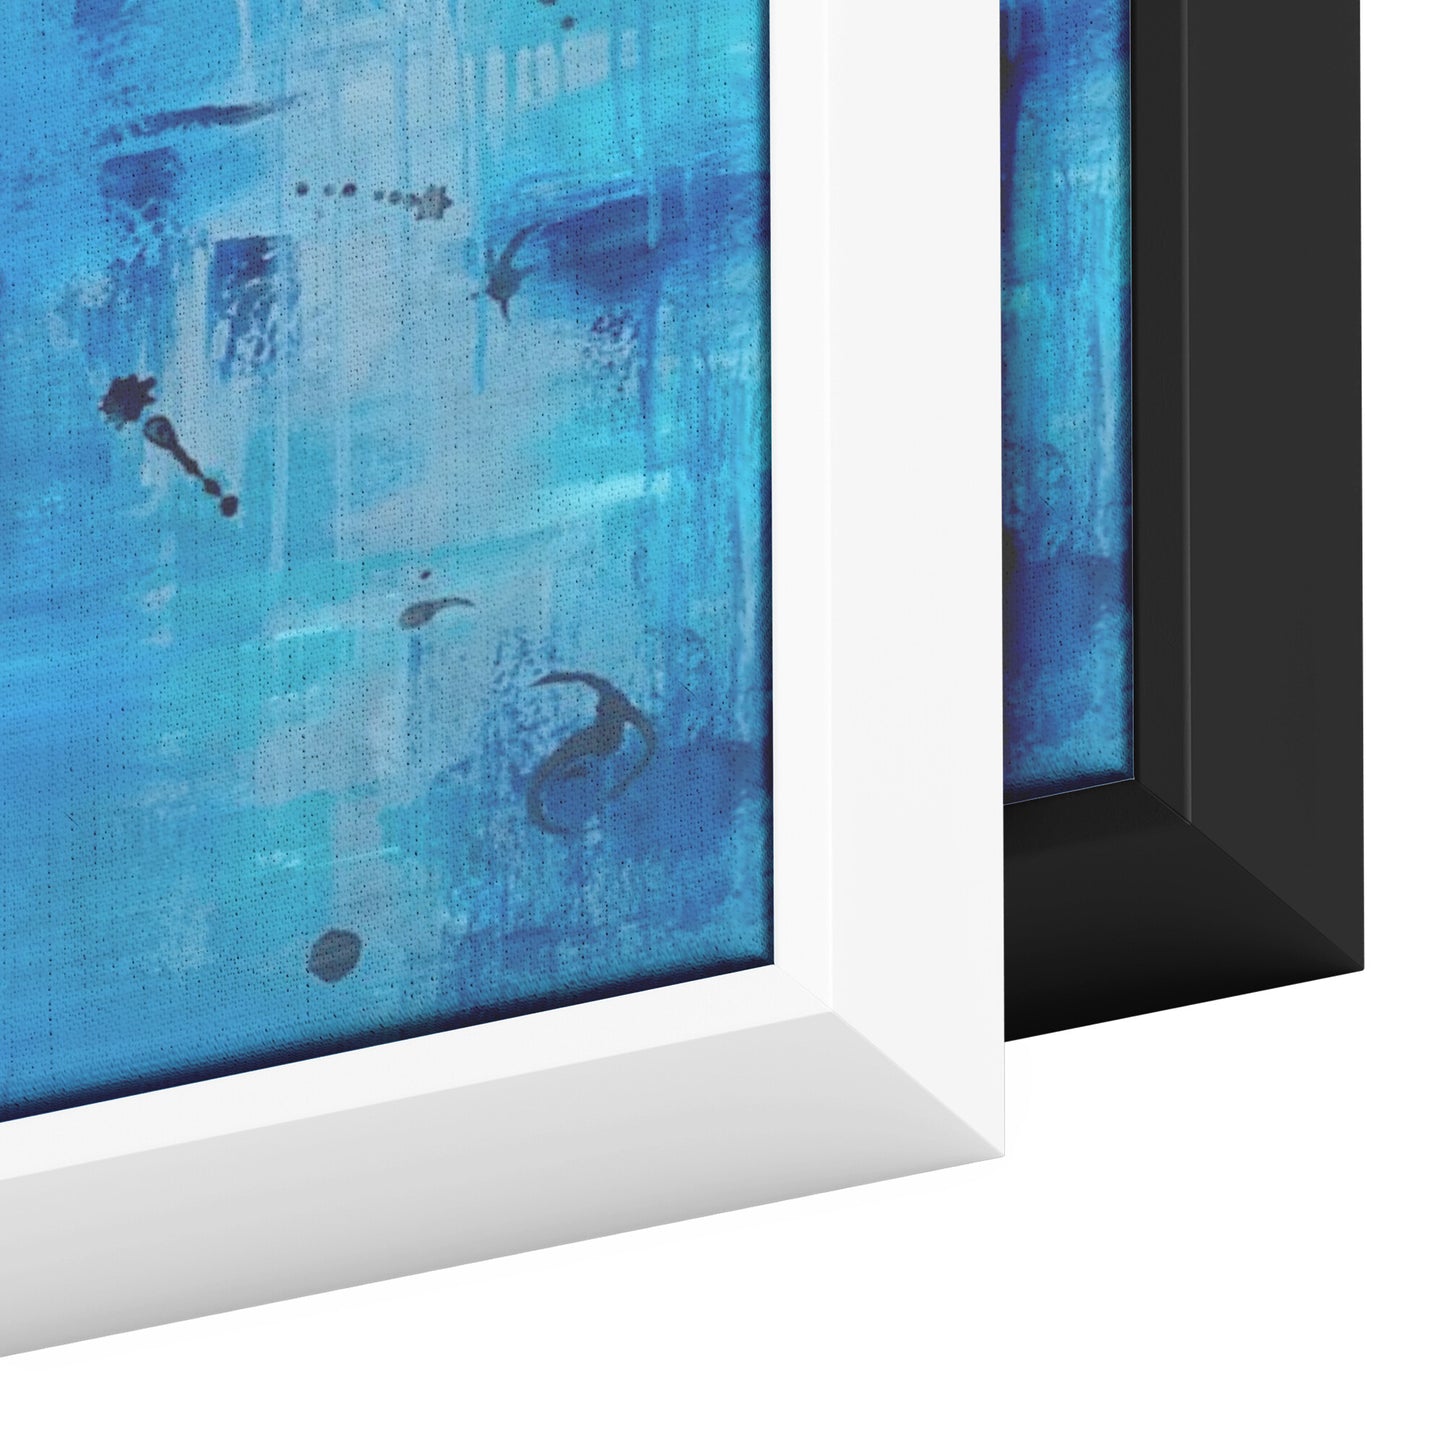 Framed Canvas Print: Under the Deep Blue Sea